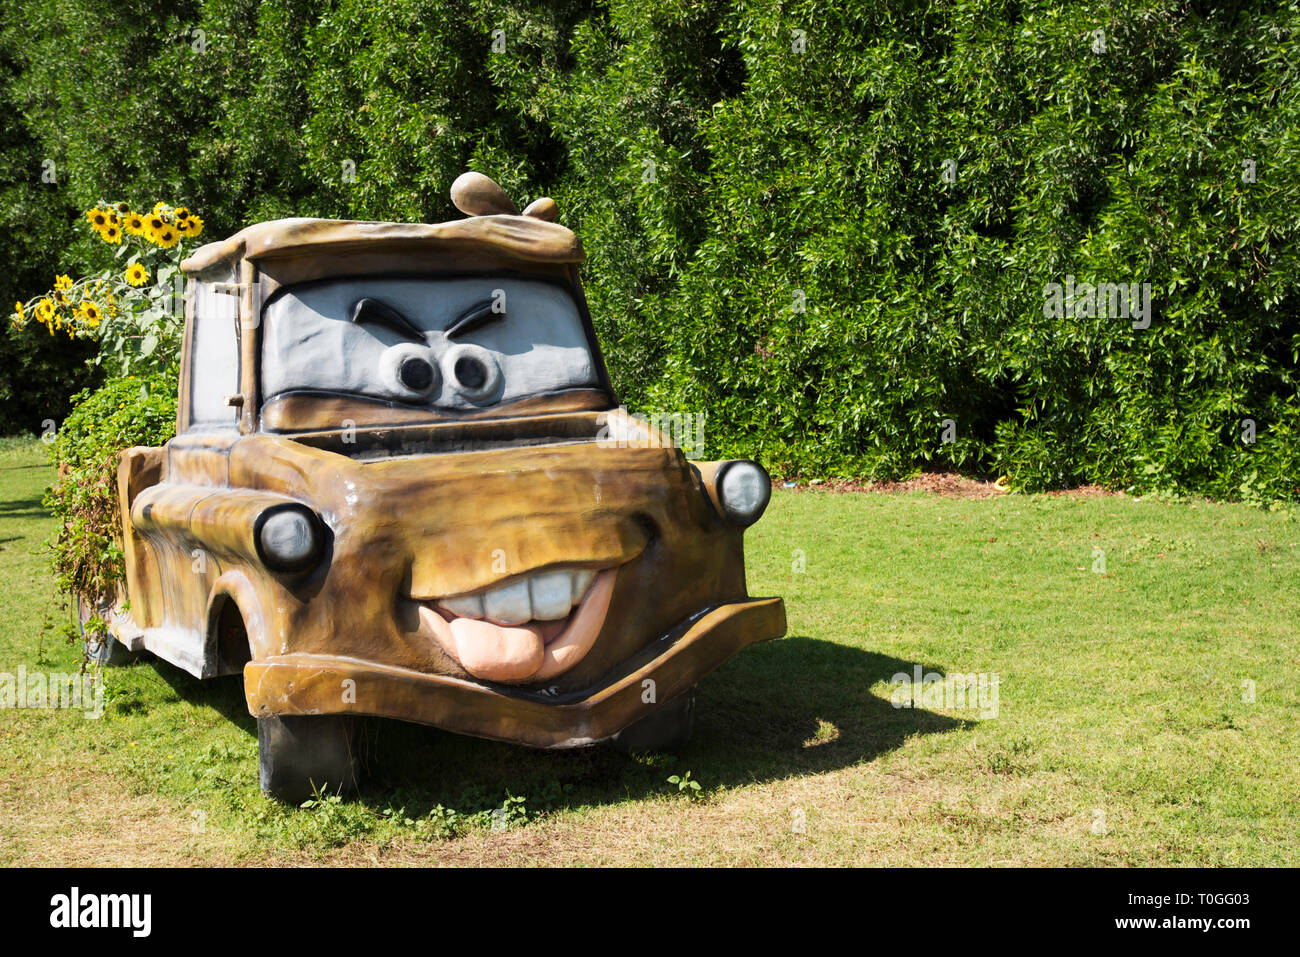 Cartoon cars come to life